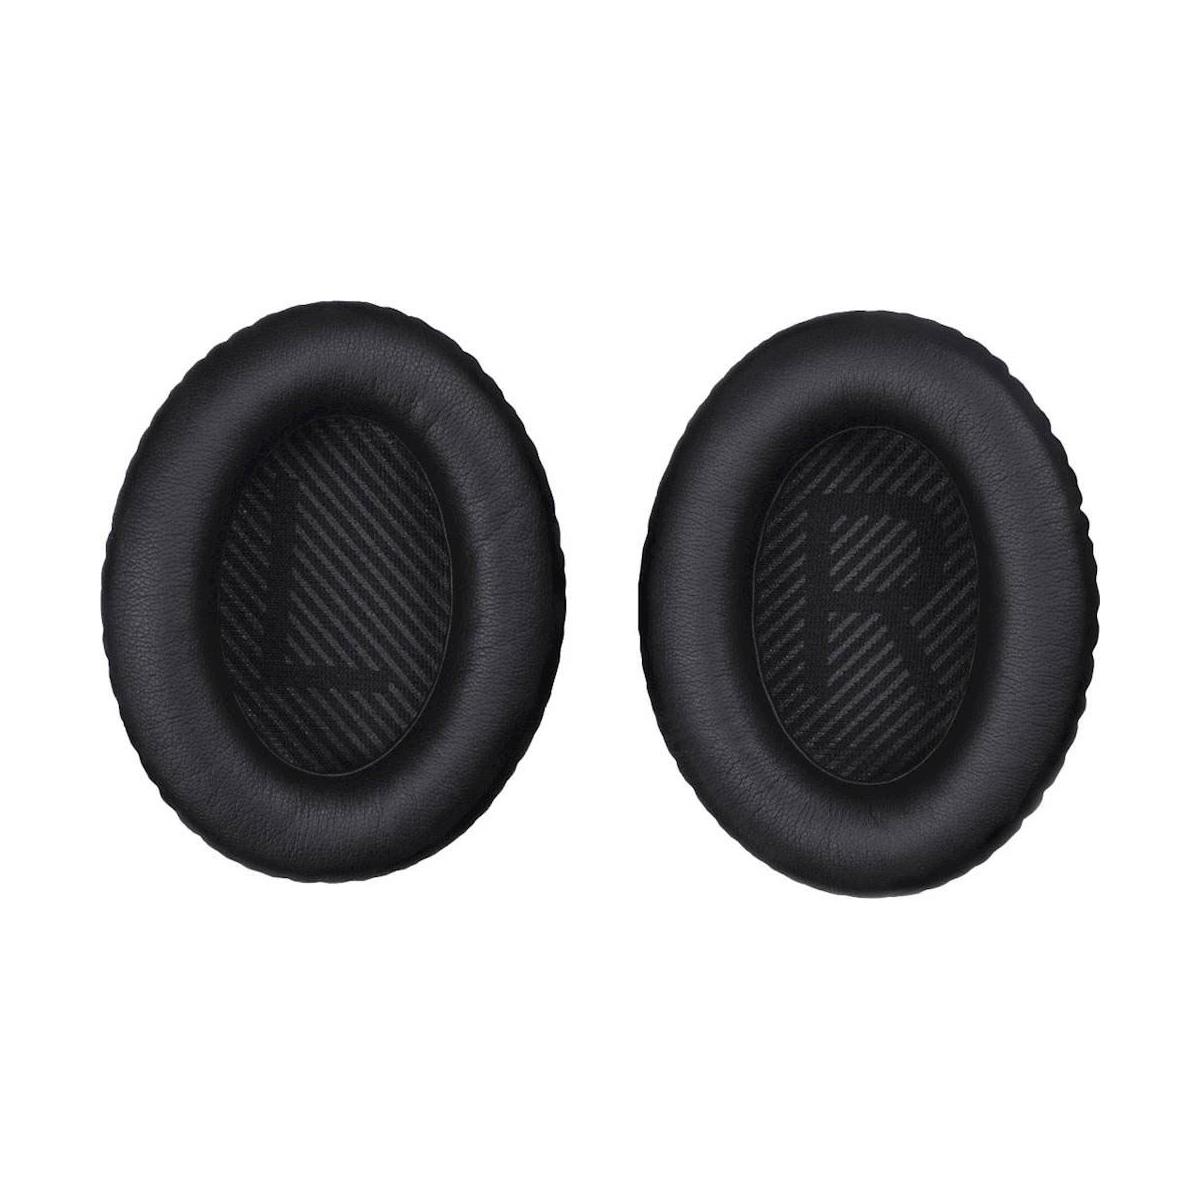 Image of Bose Ear Cushion Kit for QuietComfort 3 Headphones